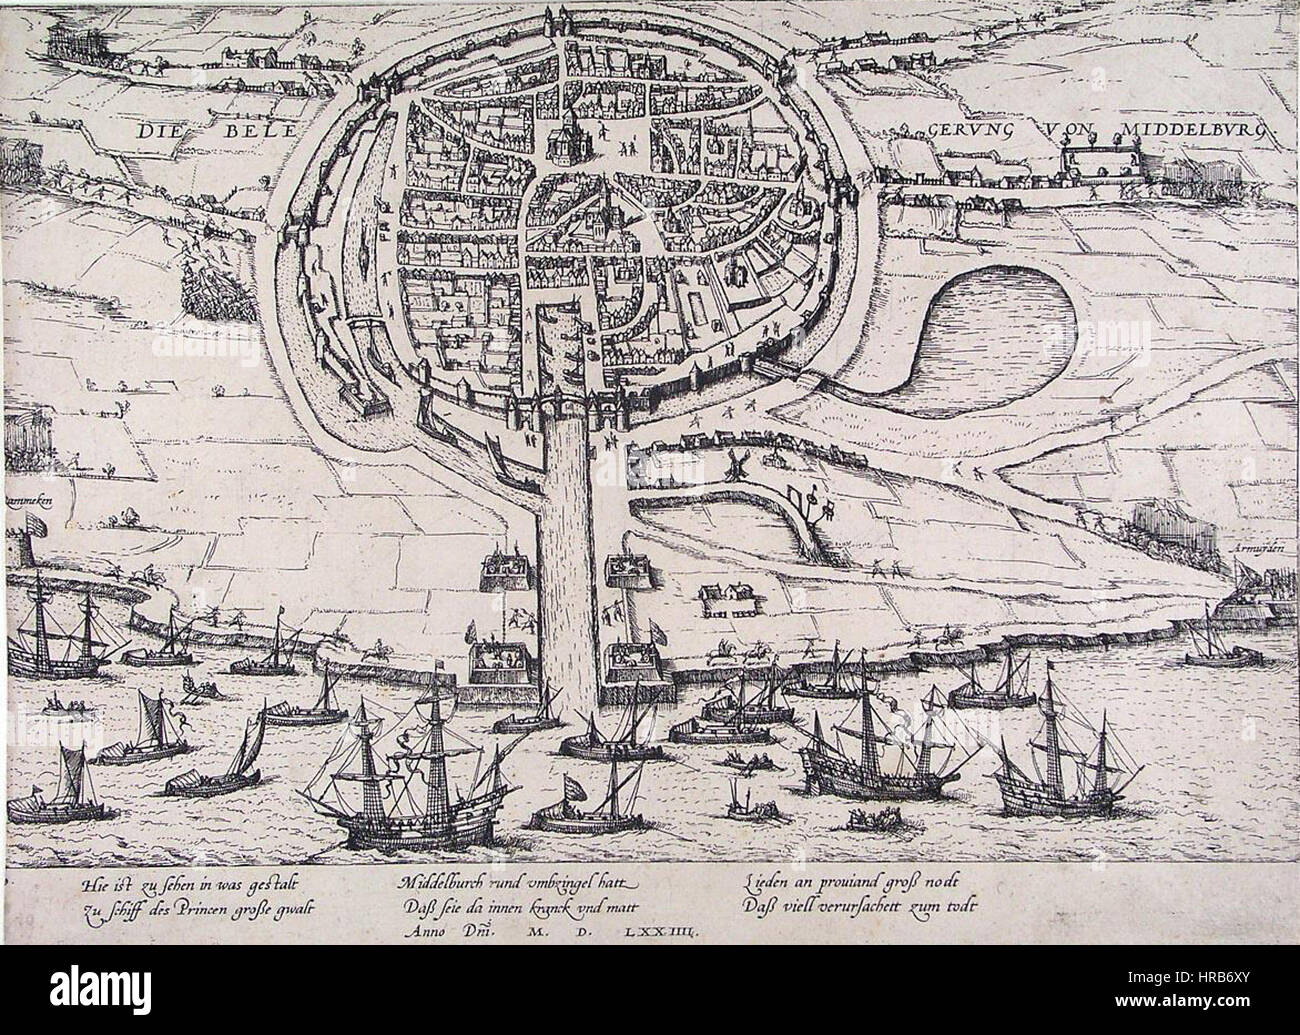 Siege of Middelburg - Beleg van Middelburg in 1574 (Frans Hogenberg) Stock Photo